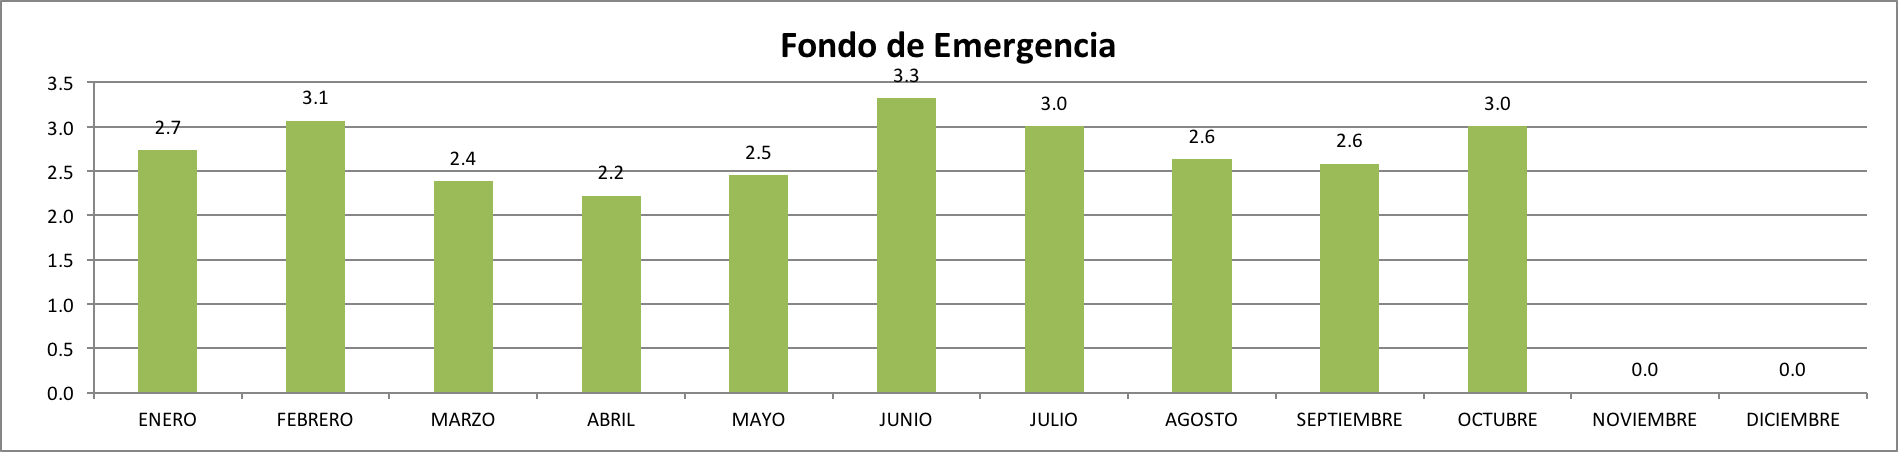 fondo-de-emergencia-octubre-2016